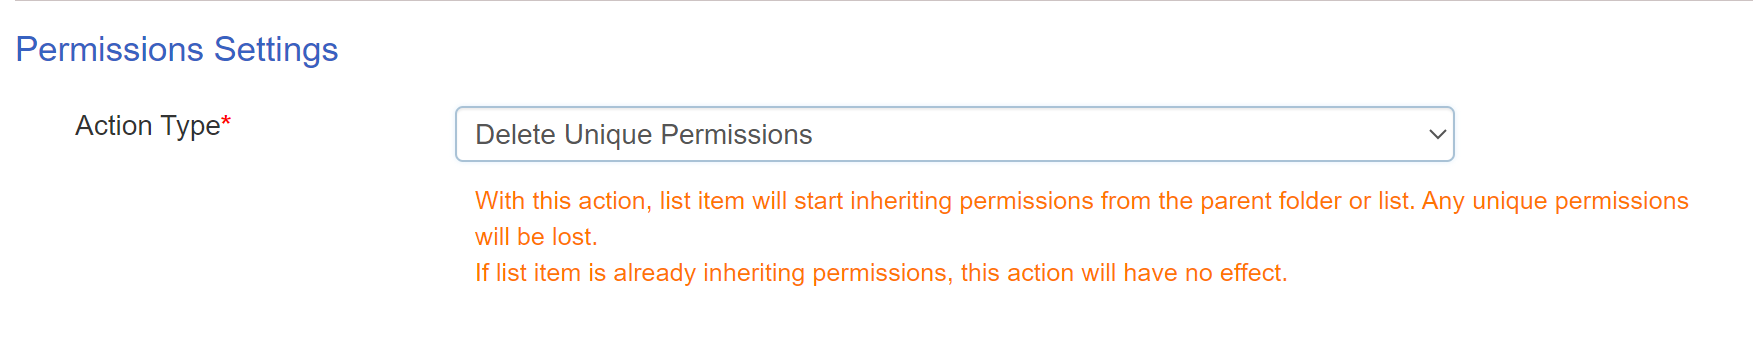 Delete unique permissions